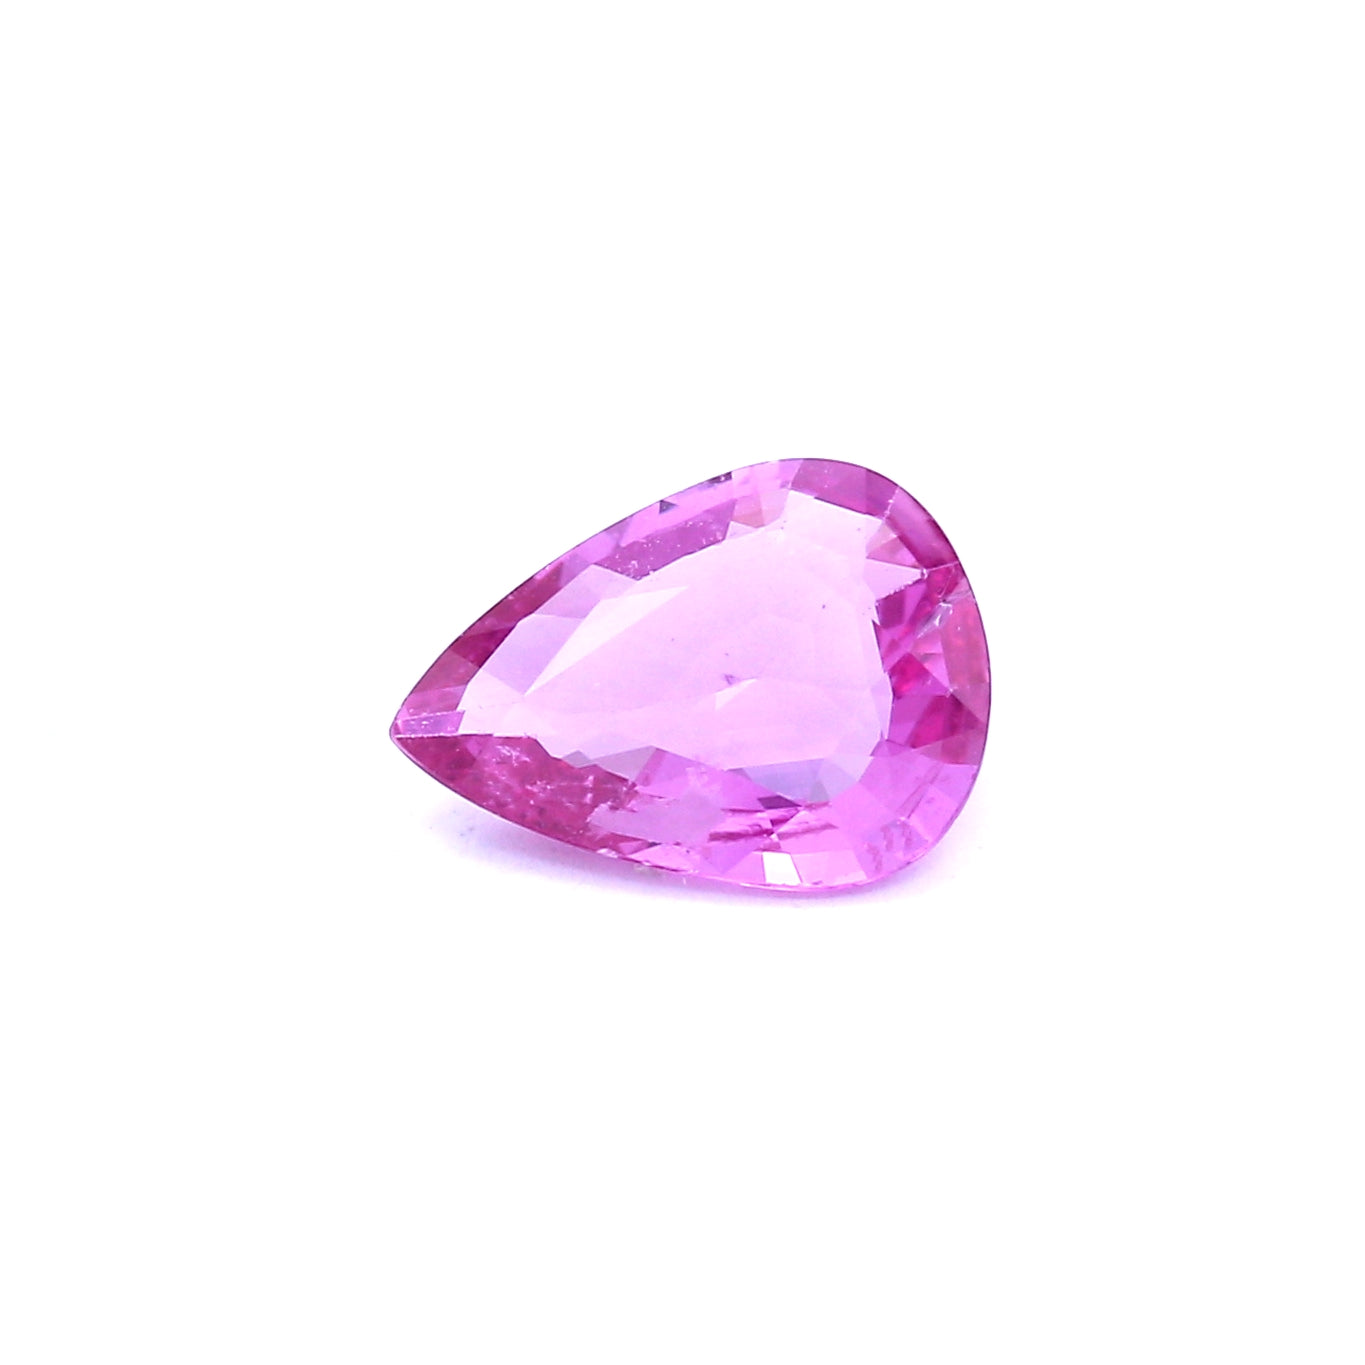 2.01ct Pink, Pear Shape Sapphire, Heated, Madagascar - 10.56 x 7.86 x 2.99mm